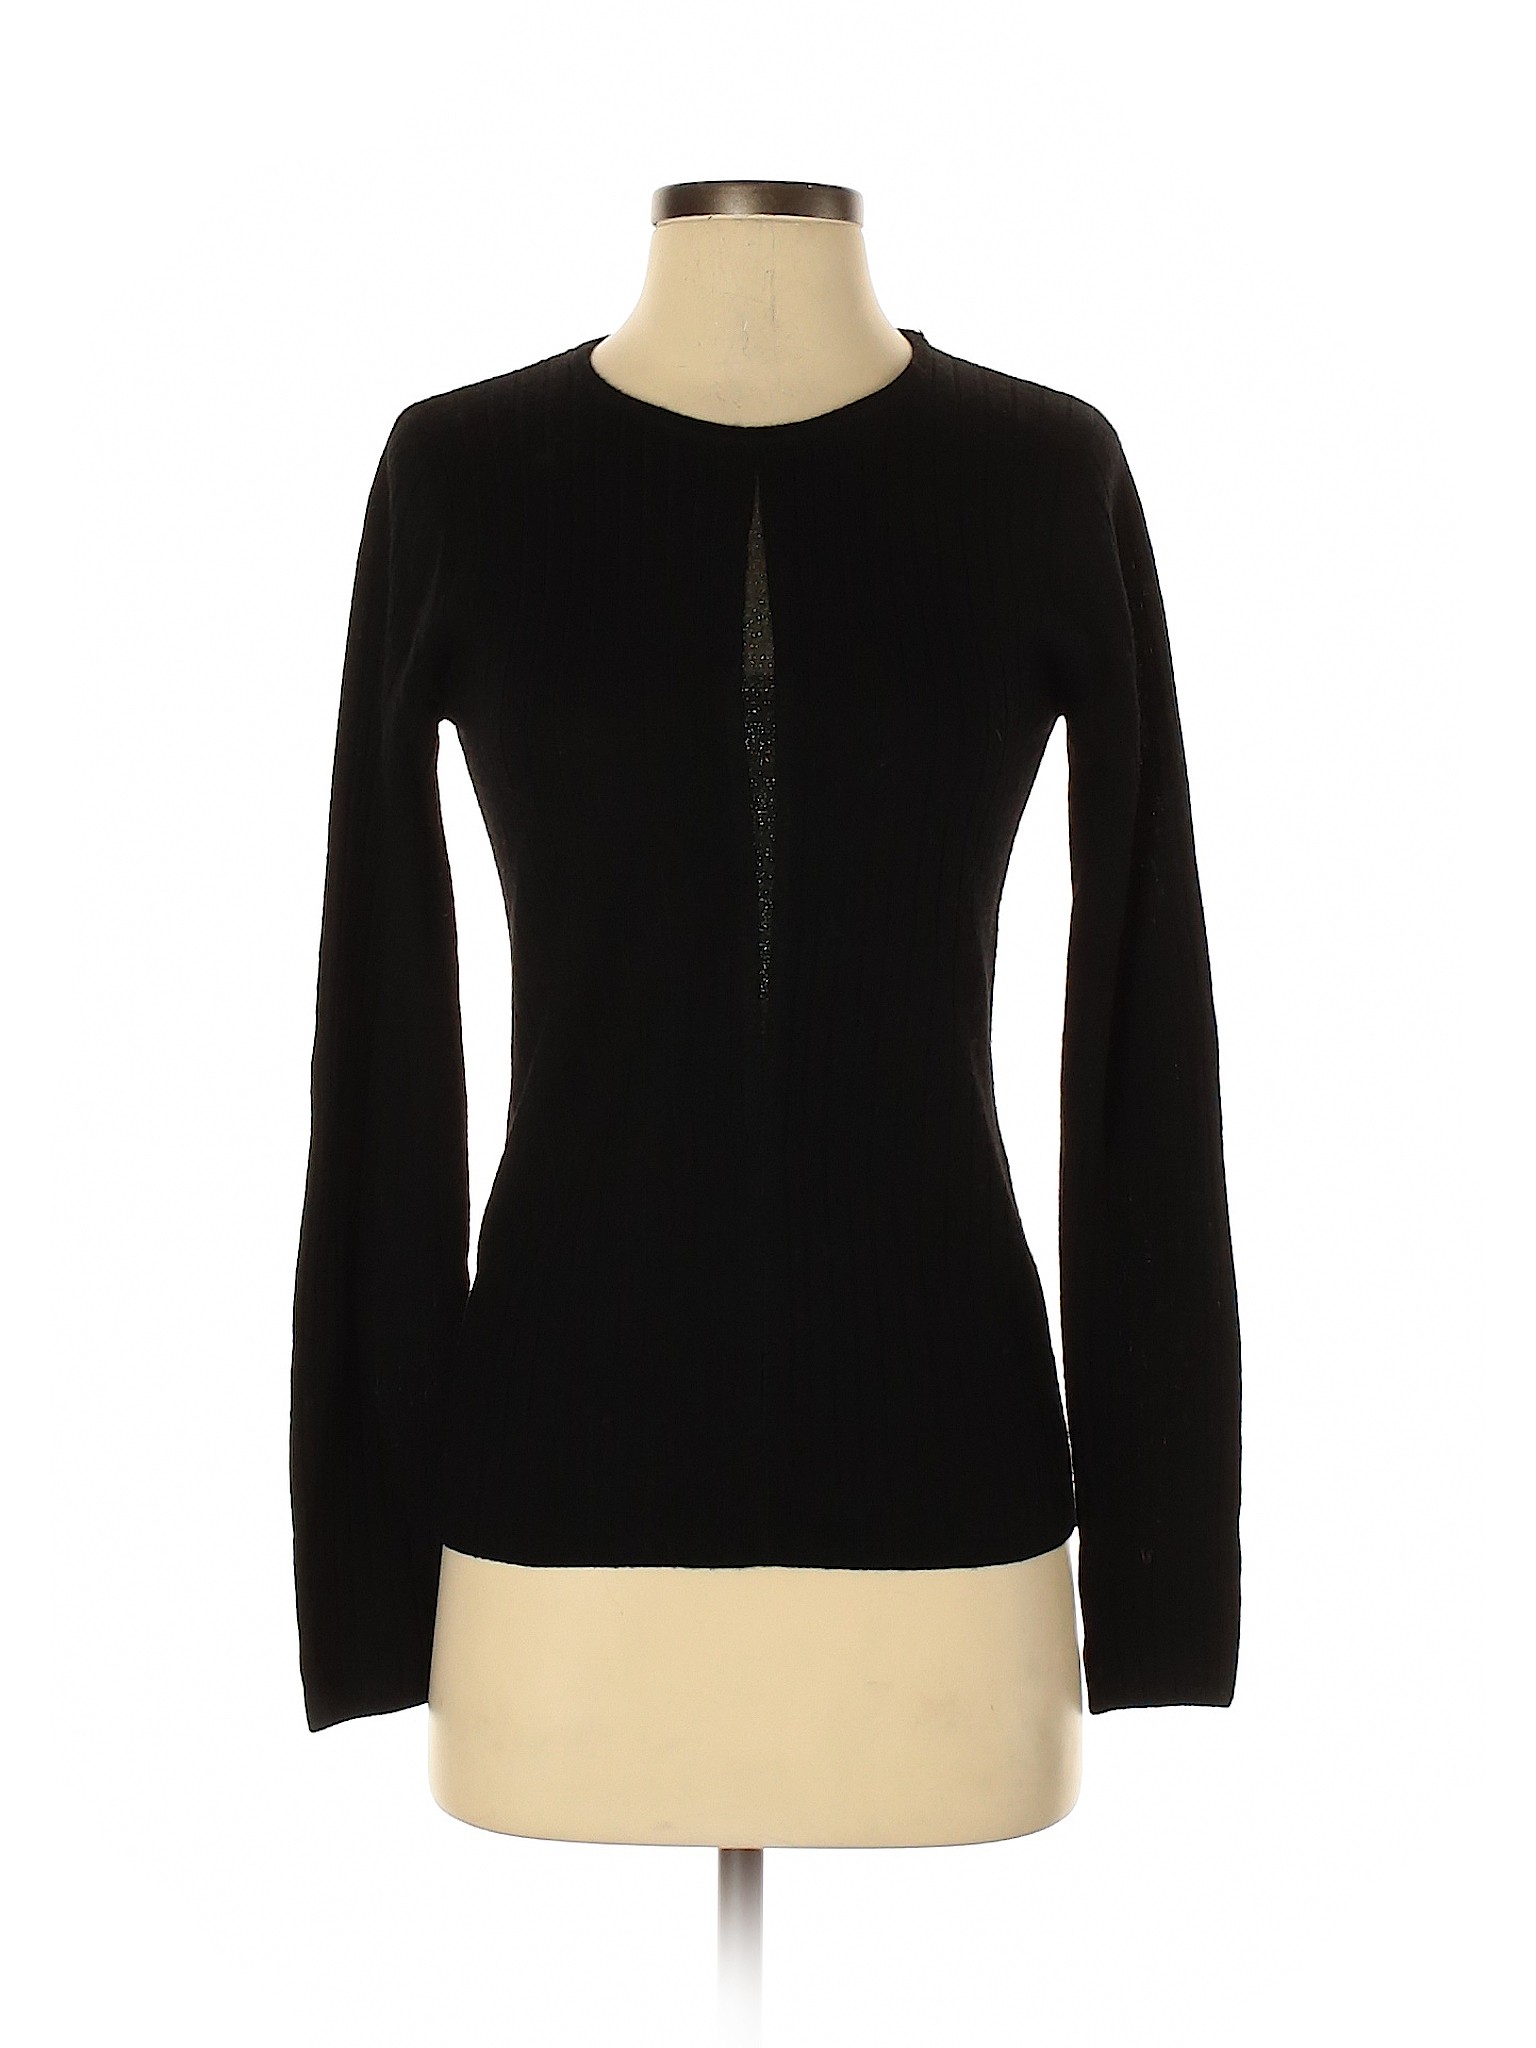 Elie Tahari Women Black Wool Pullover Sweater XS | eBay